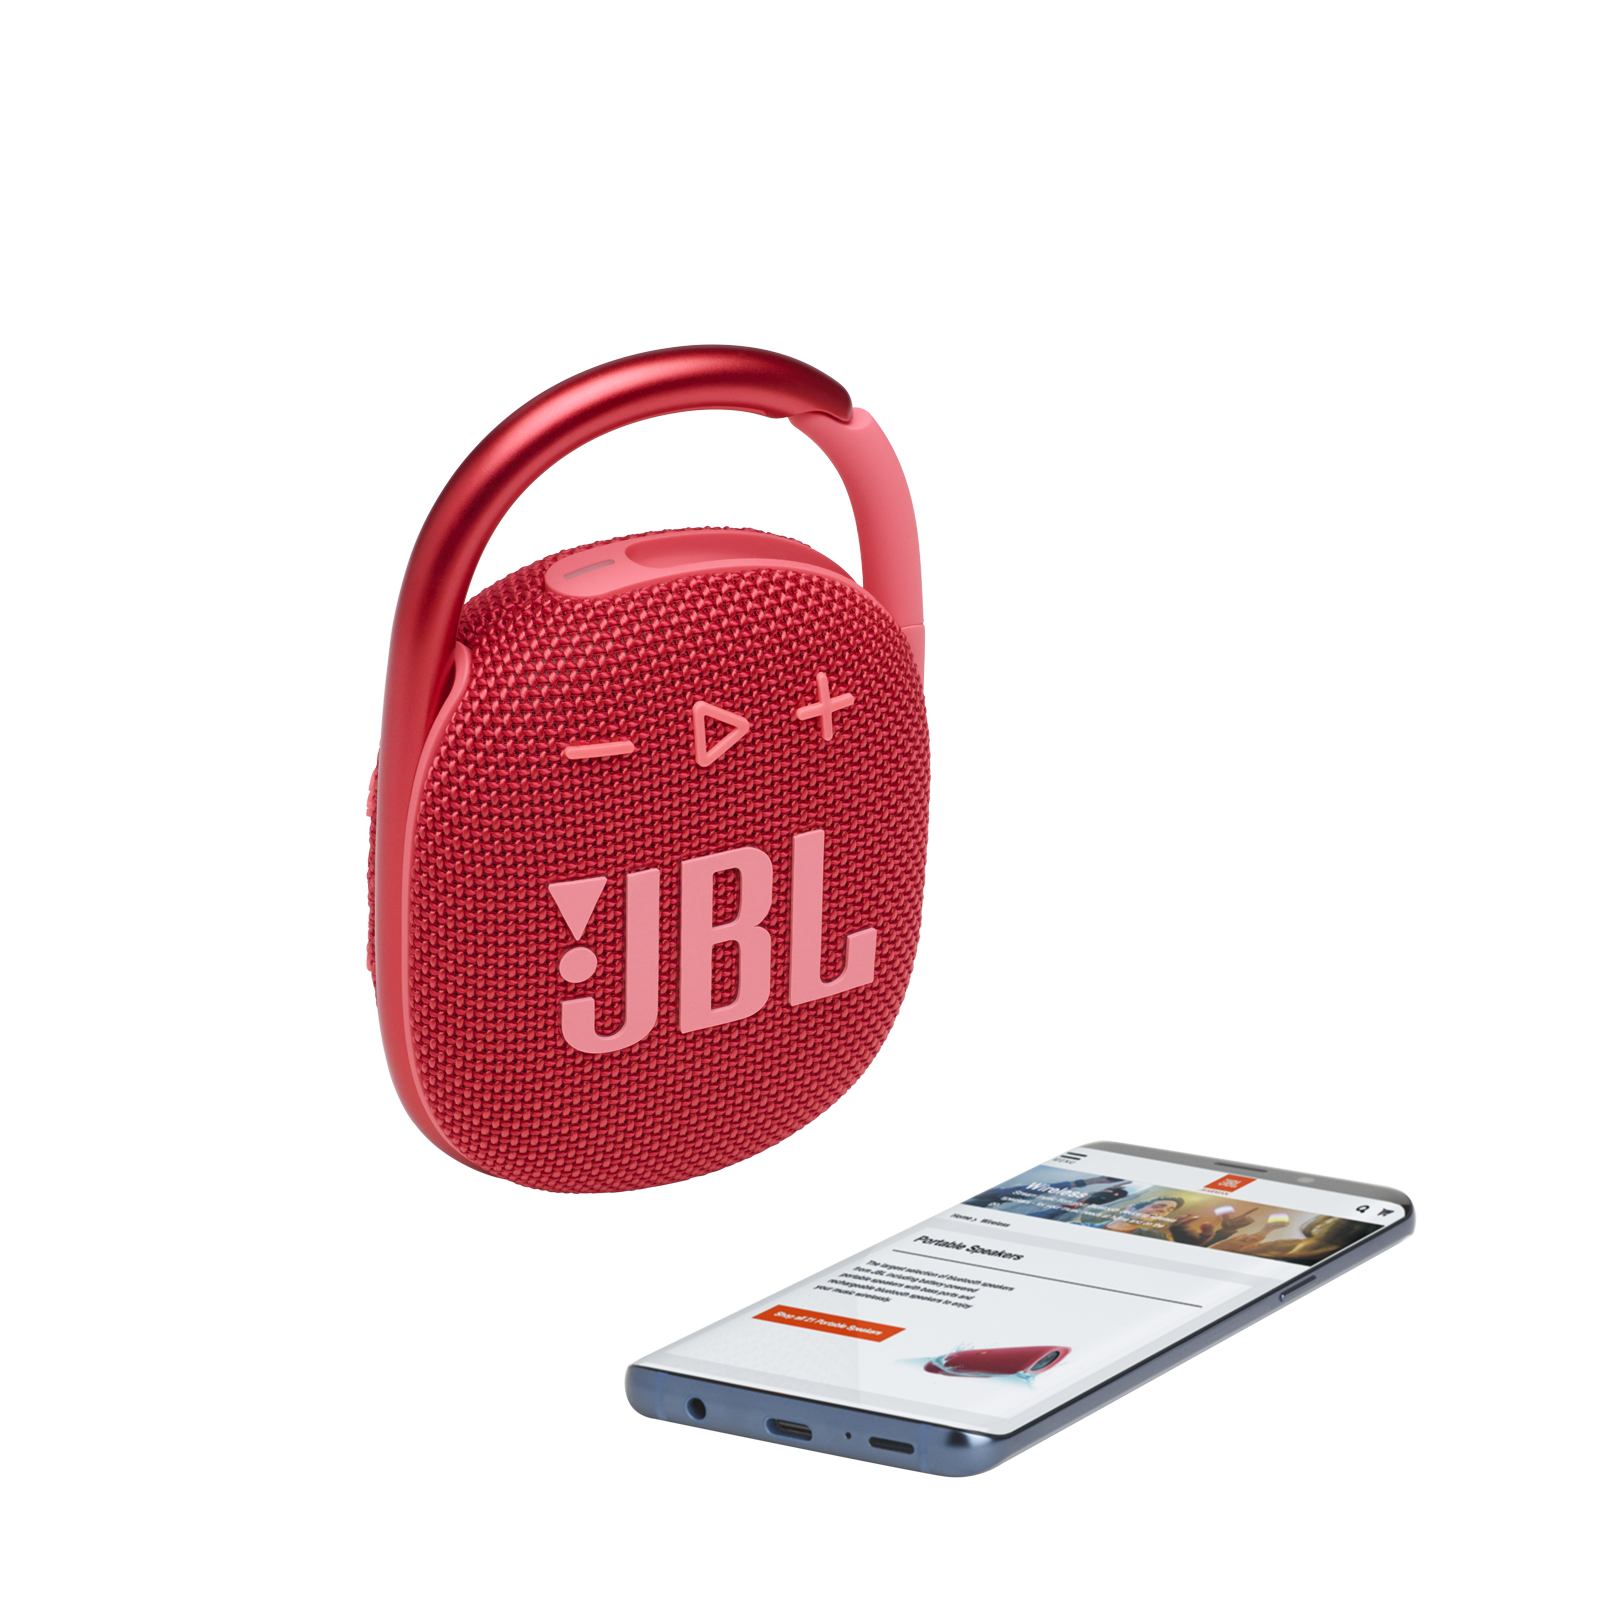 JBL Clip 4 - Red - Ultra-portable Waterproof Speaker - Detailshot 1